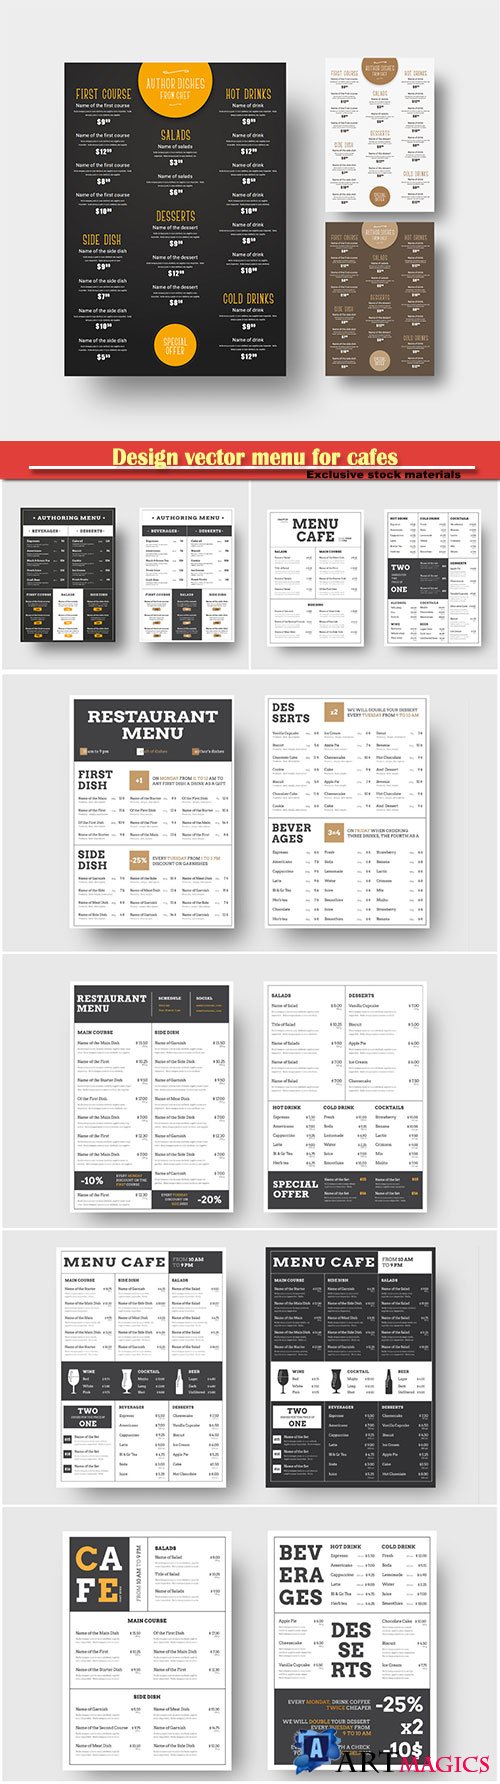 Design vector menu for cafes and restaurants